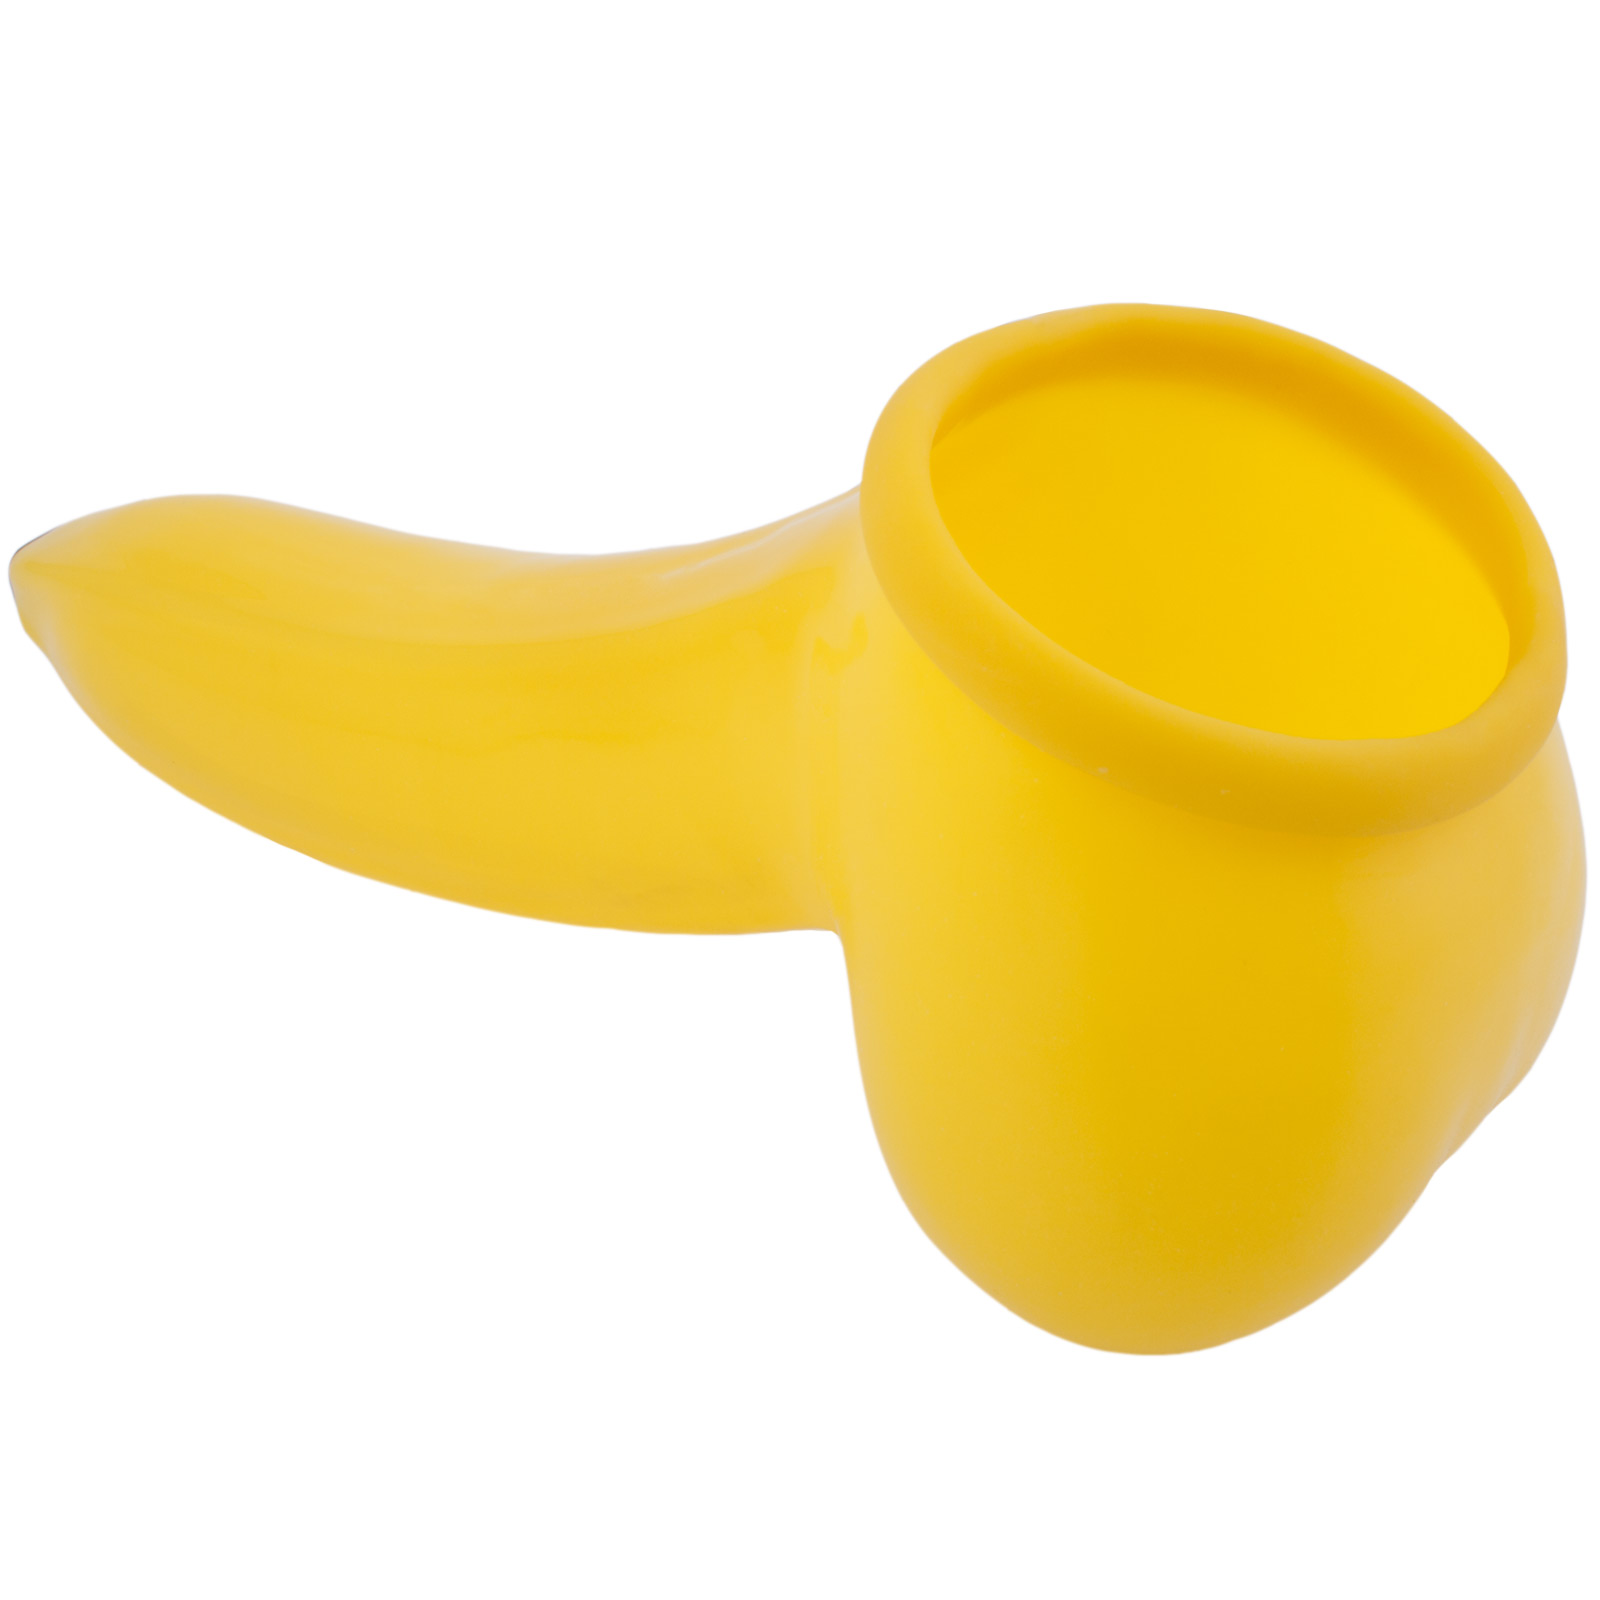 Latex Condom Sheath In Banana Design In Two Sizes 0897